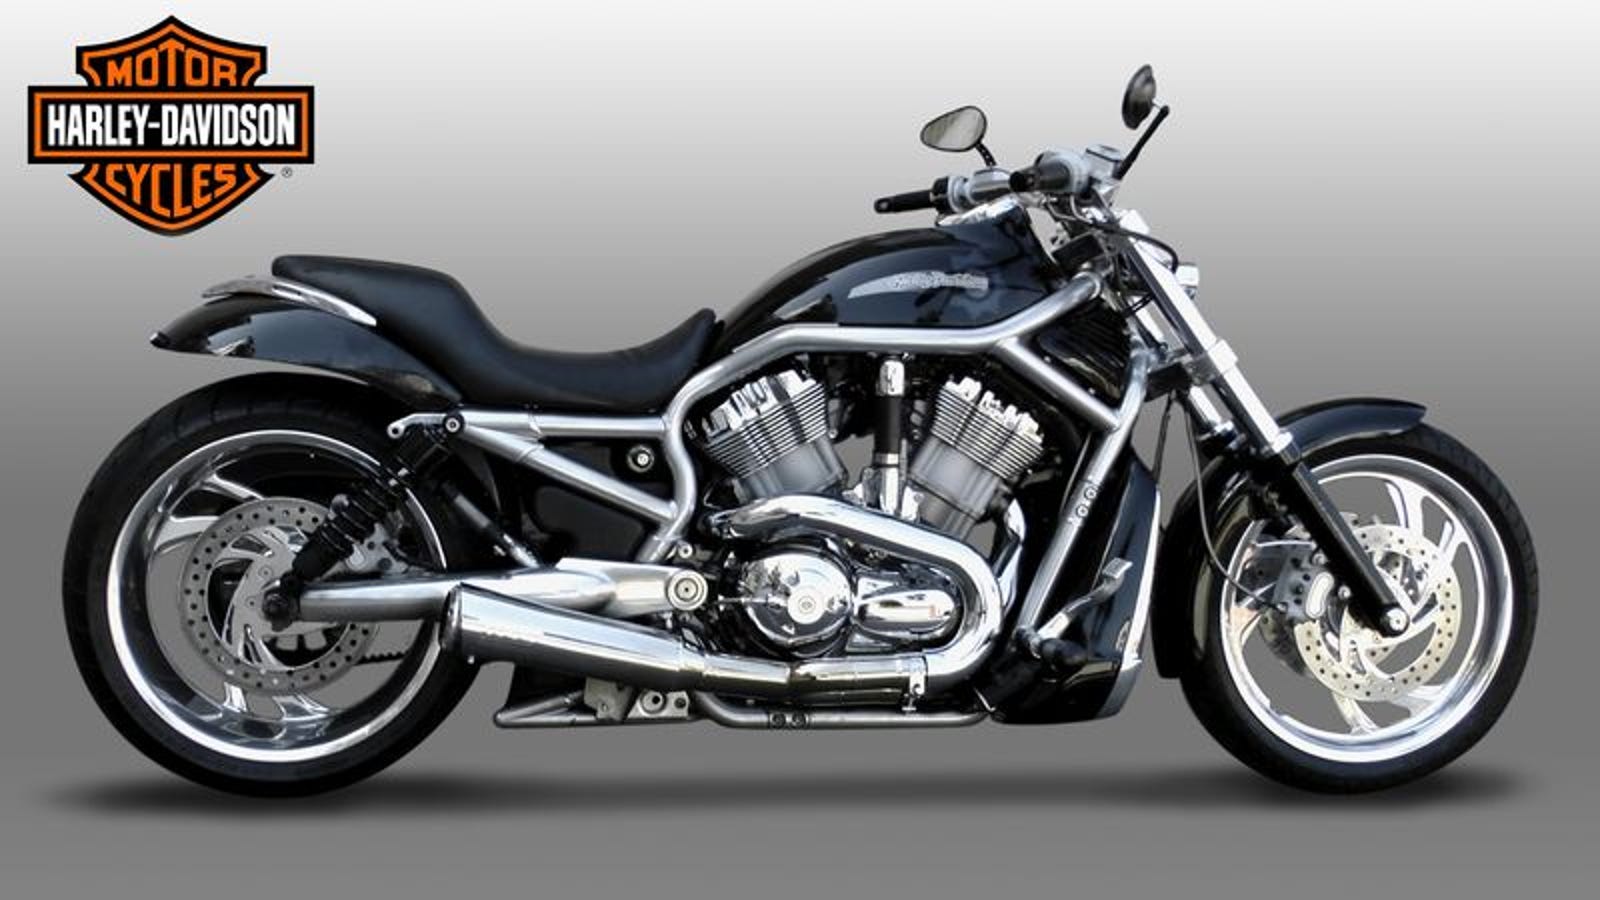 Harley-Davidson Releases New Motorcycle Designed For Men